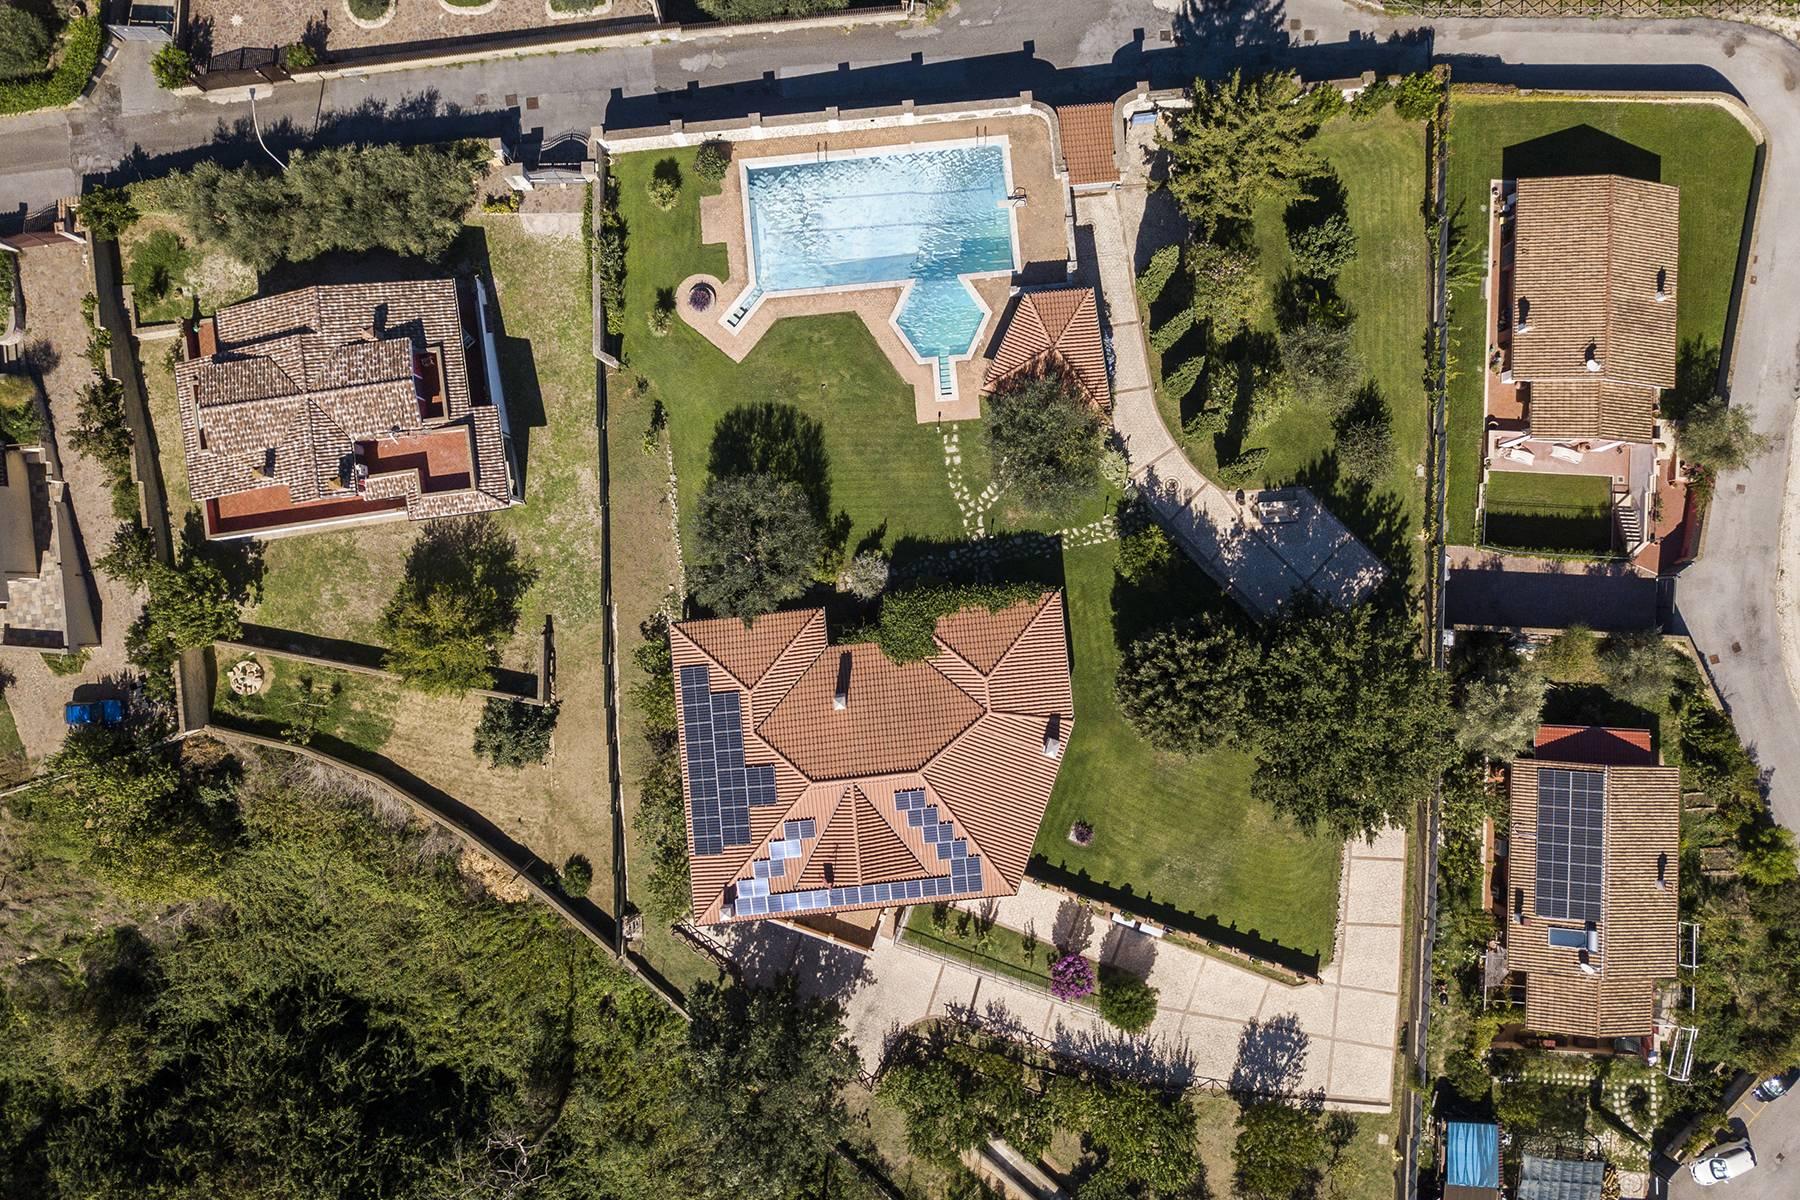 Moderna villa con piscina a due passi da Roma - 9